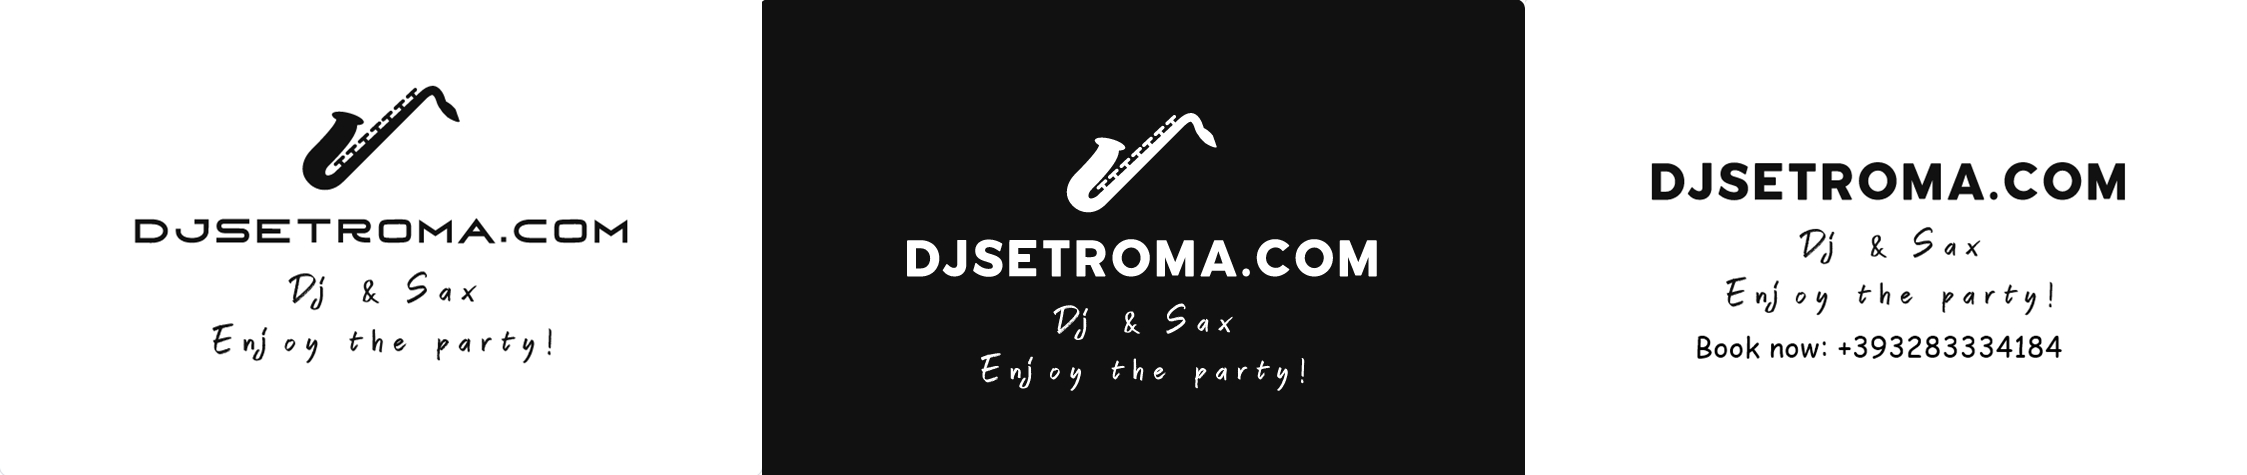 Djset Roma Hire DJSAX in Italy +393283334184